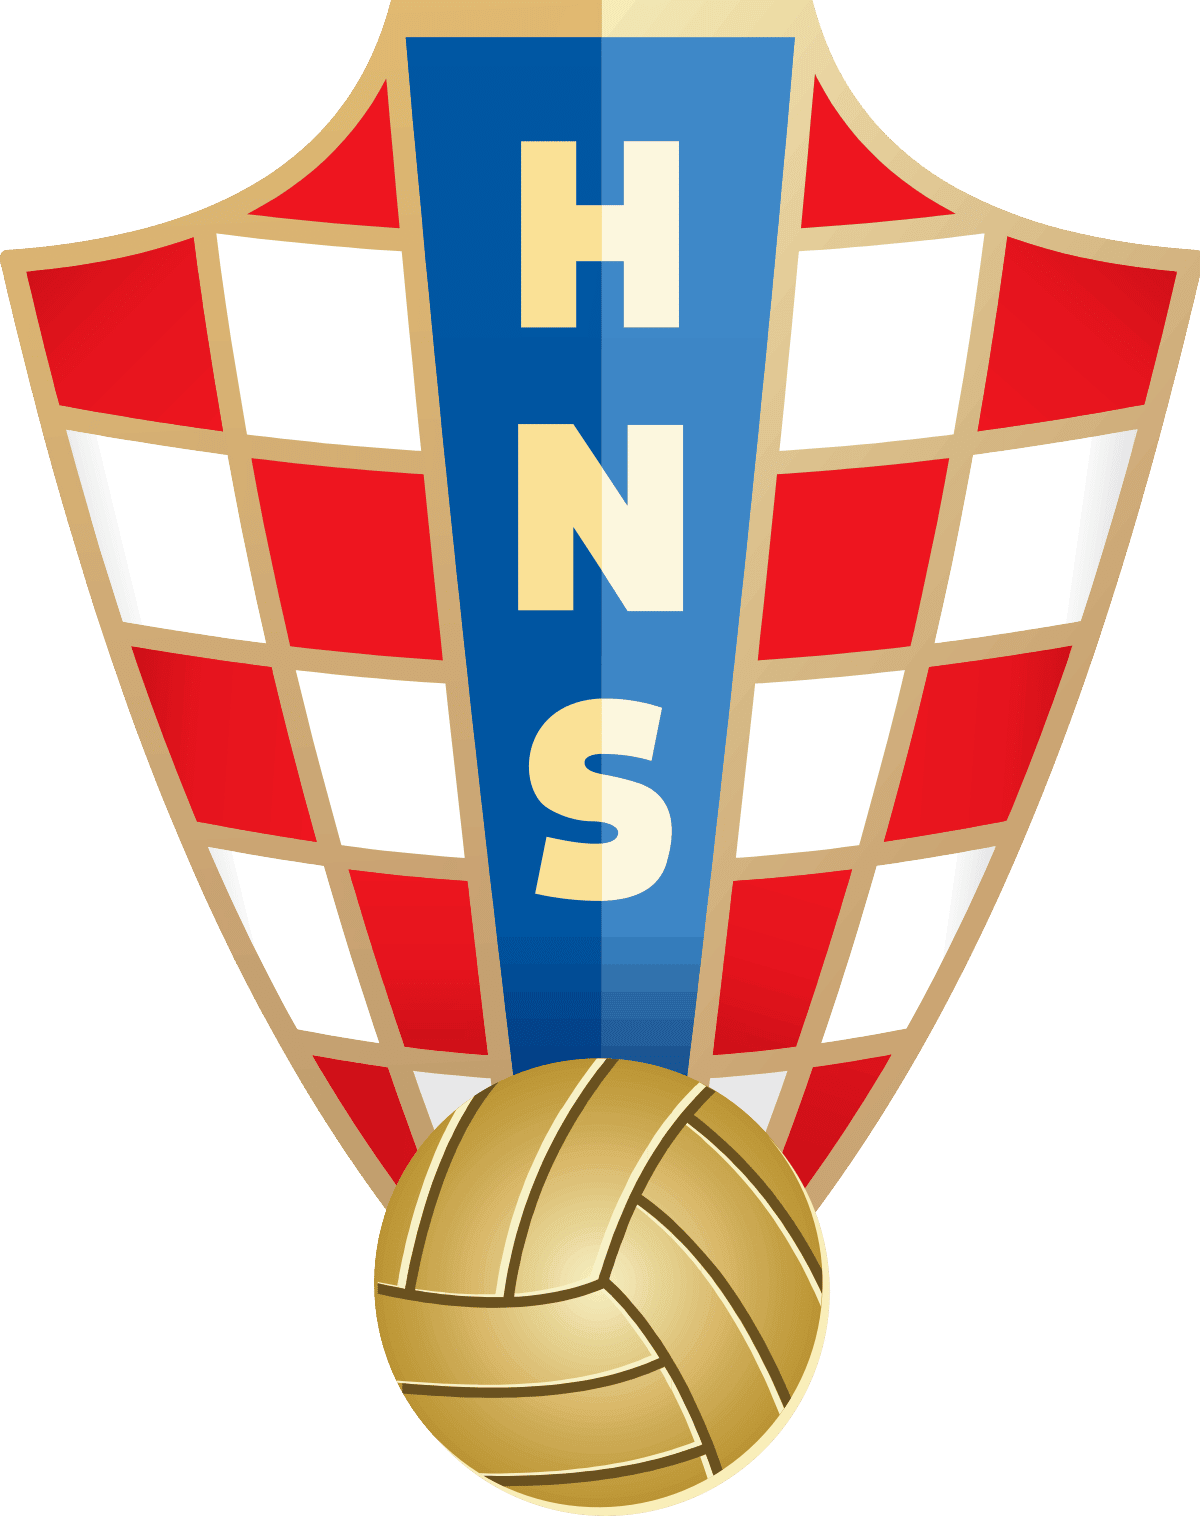 Croatia National Football Team Logo